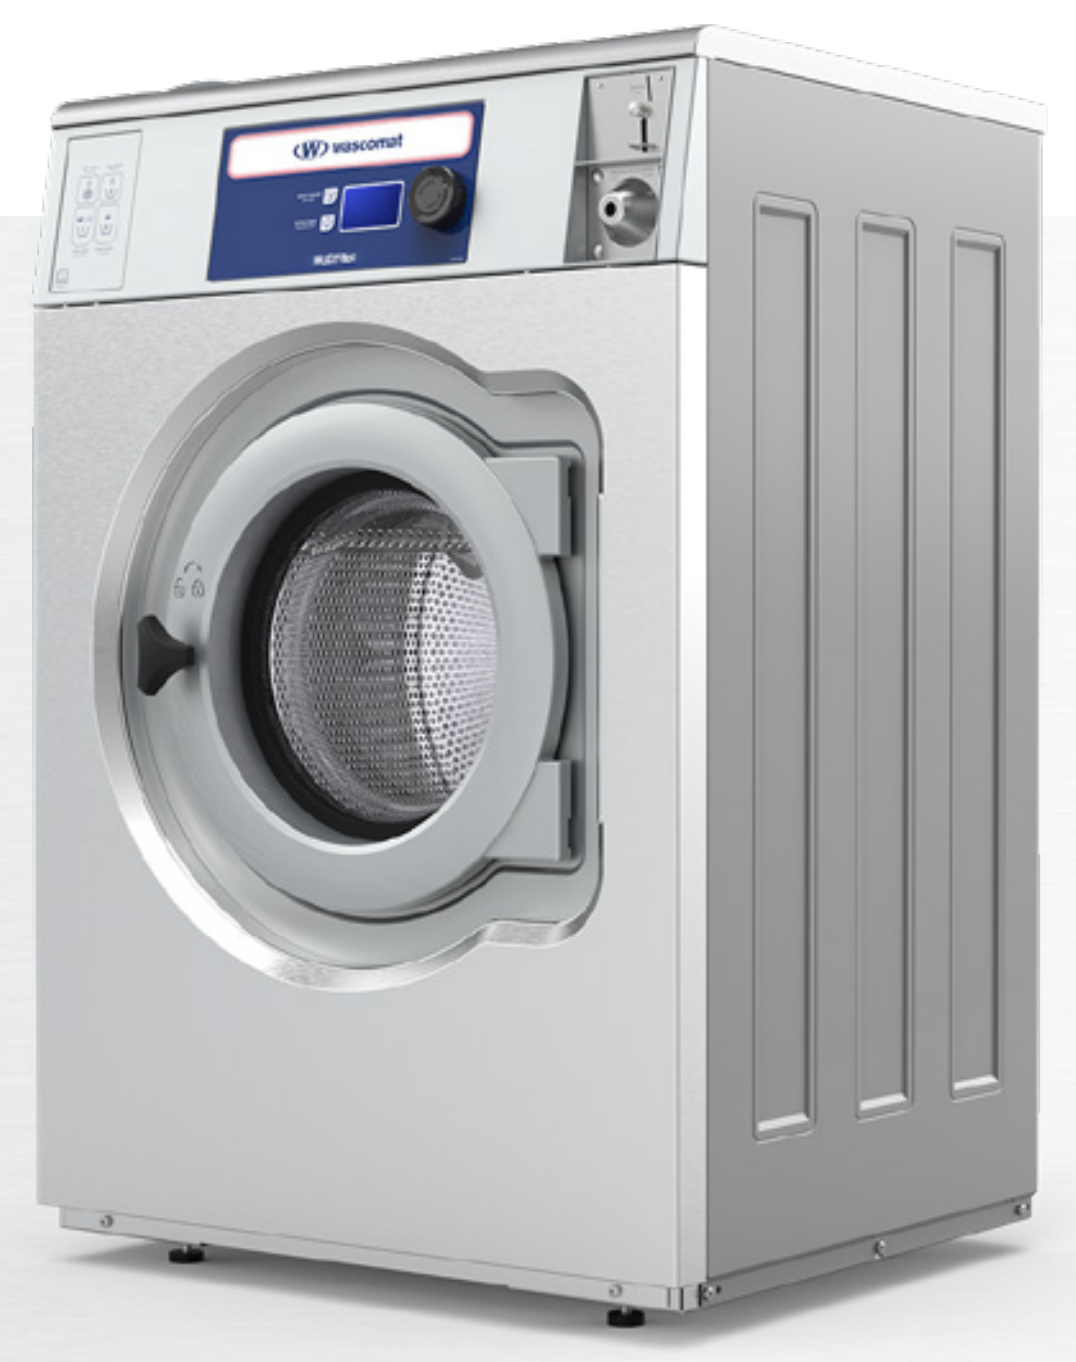 New 2022 Wascomat Wud725 - Cardinal Laundry Equipment Co